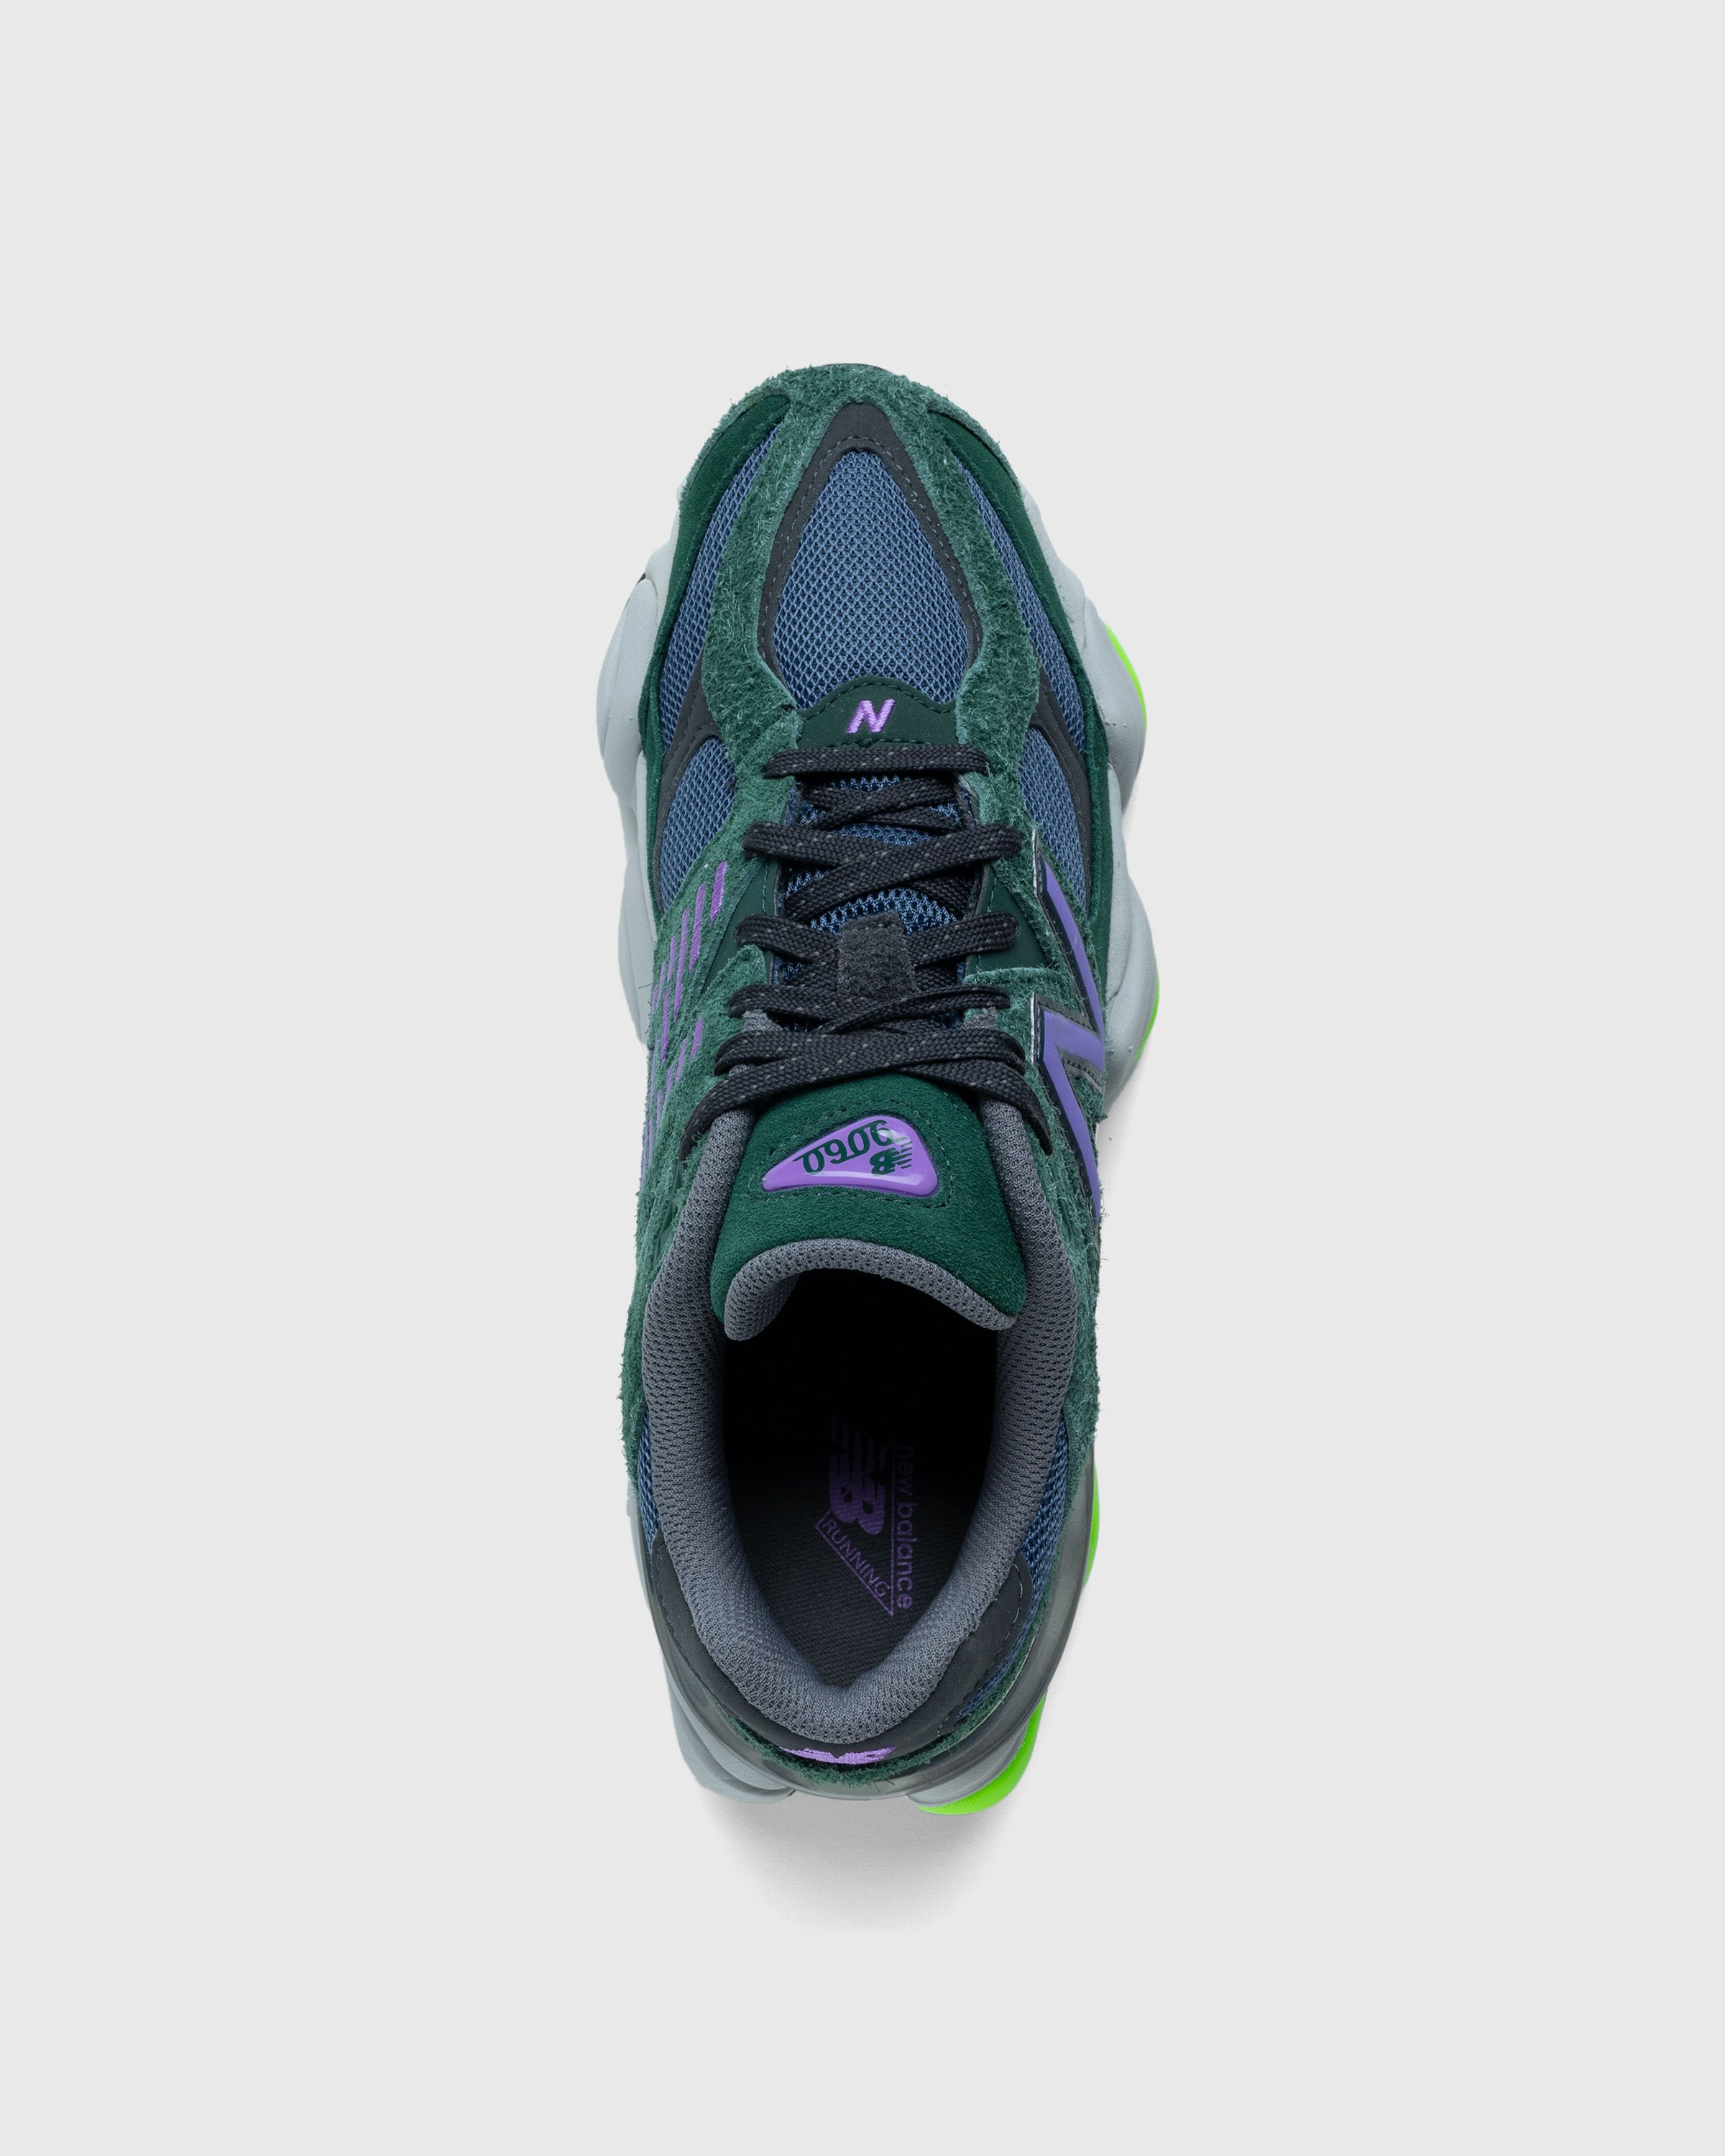 New Balance - U9060GRE Nightwatch Green - Footwear - Green - Image 5